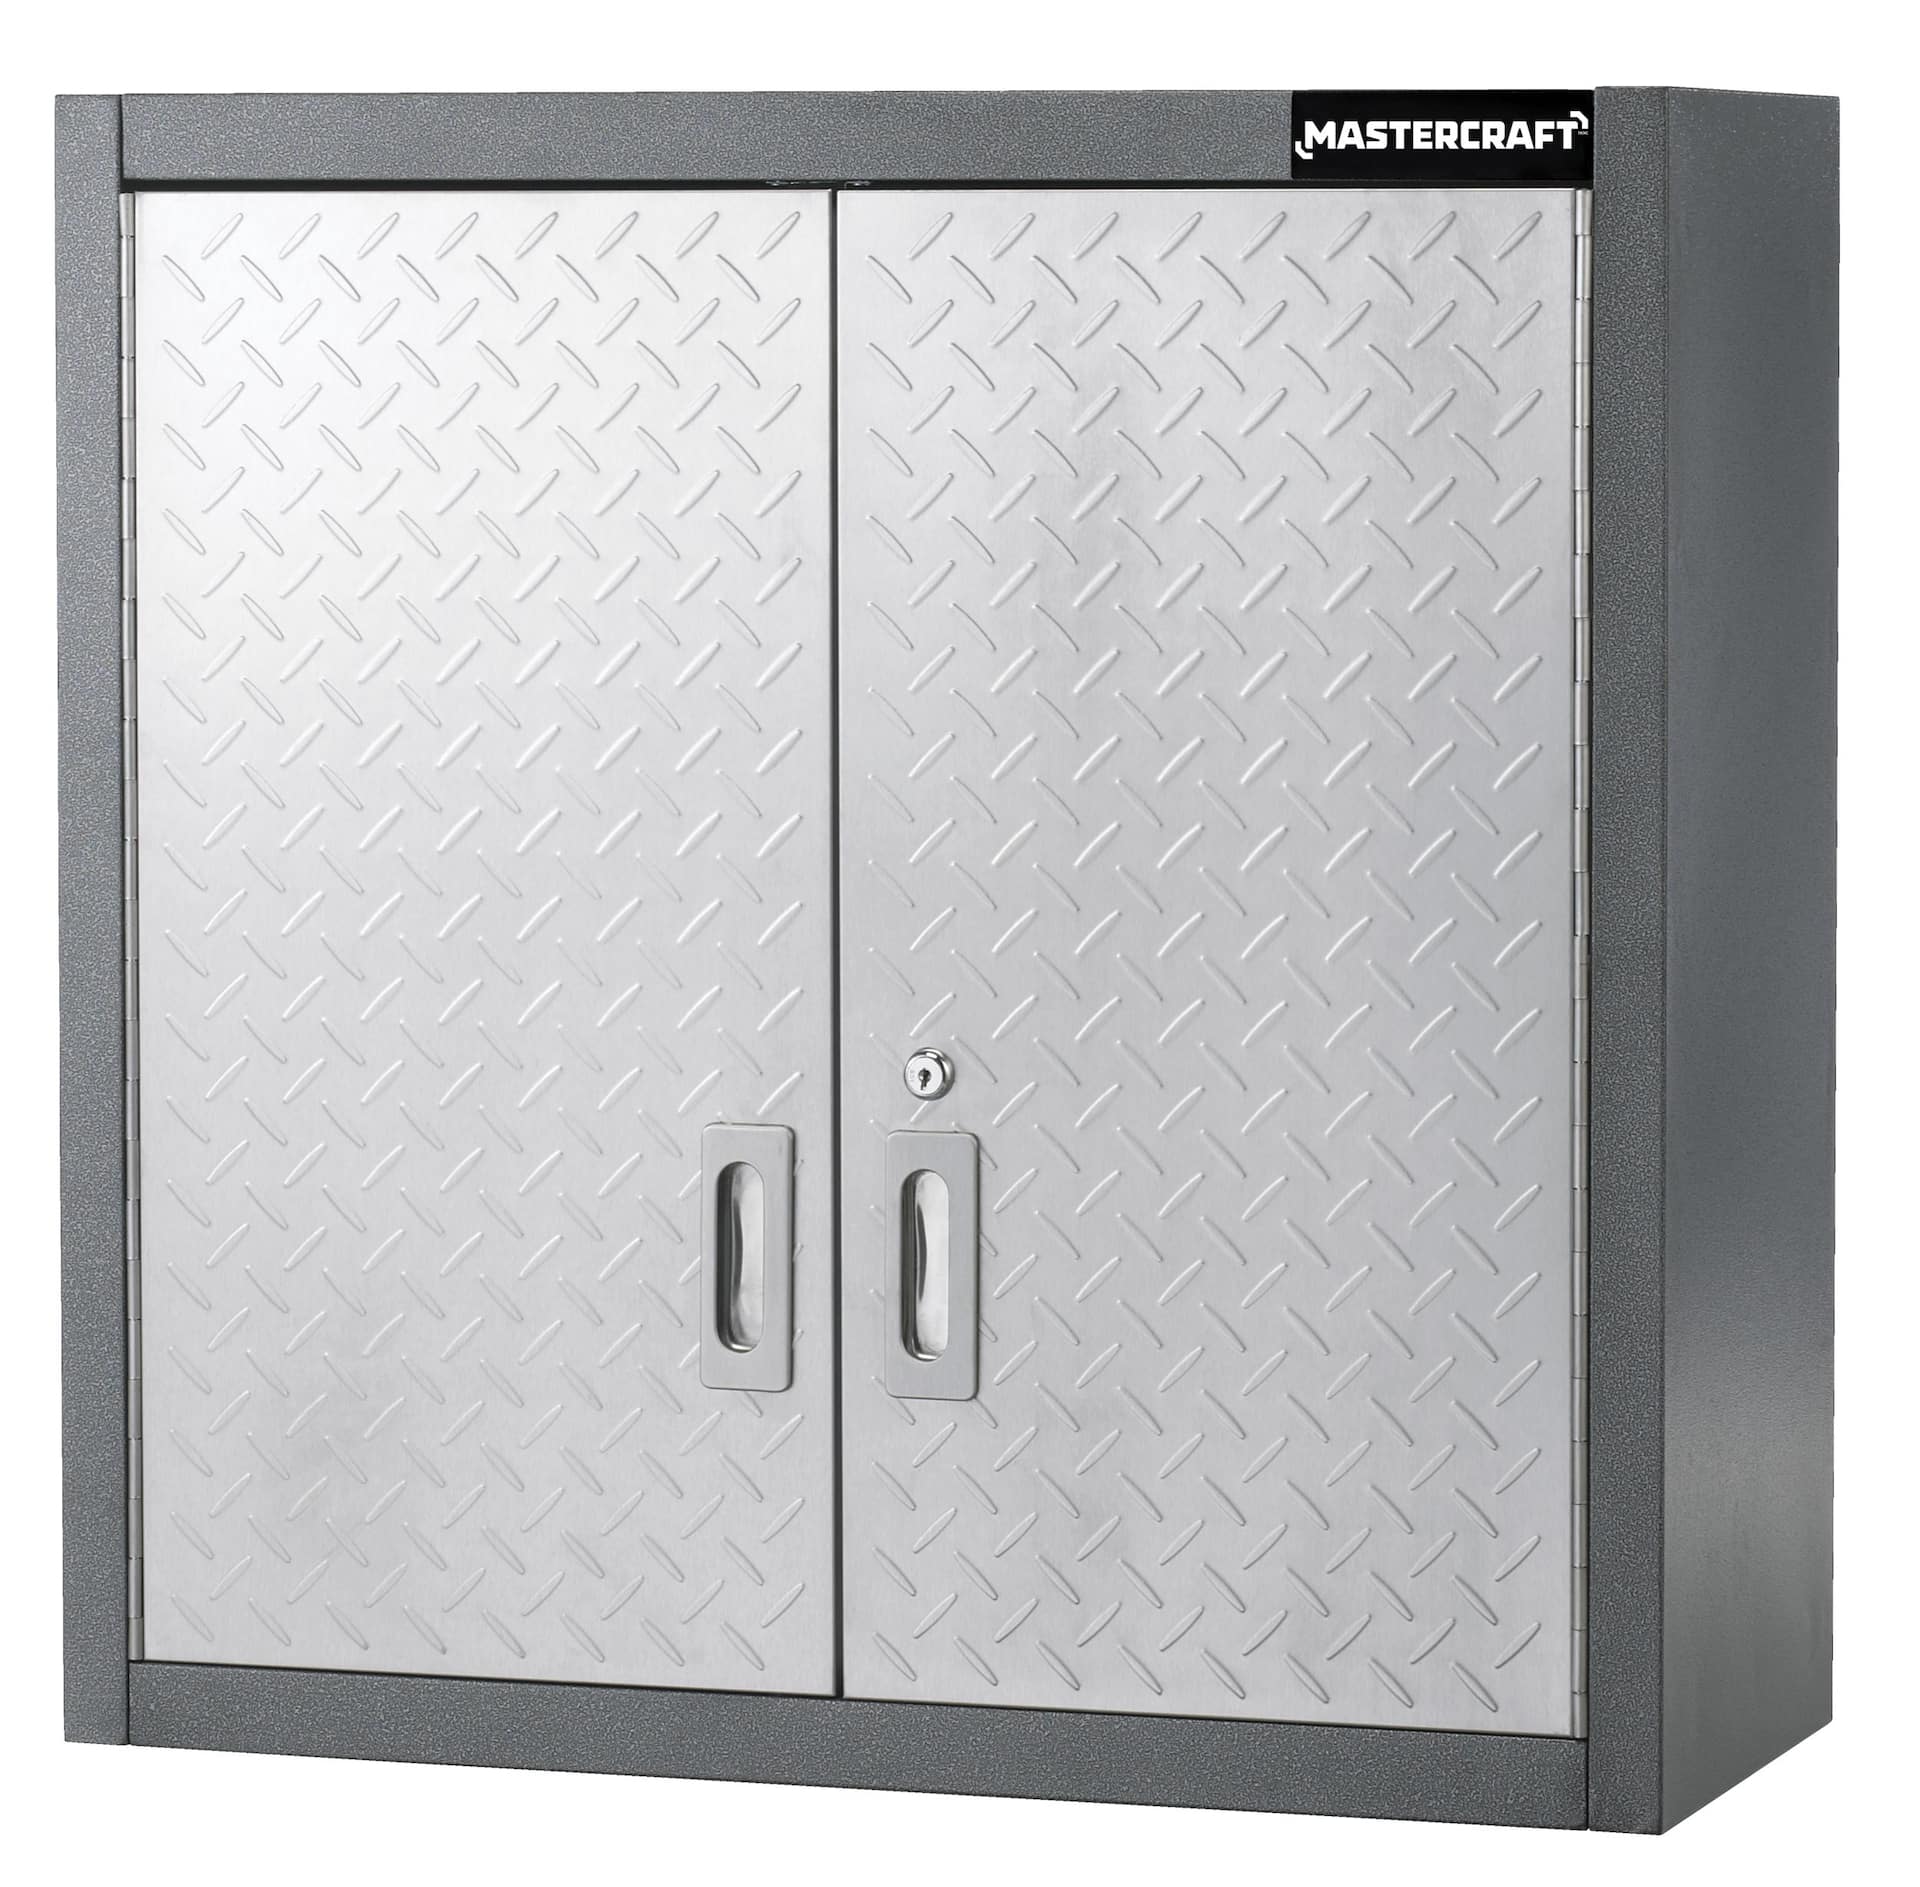 2-Door Wall Cabinet with 2 Adjustable Shelves, Diamond Series, 28 x 12 x 28-in Mastercraft